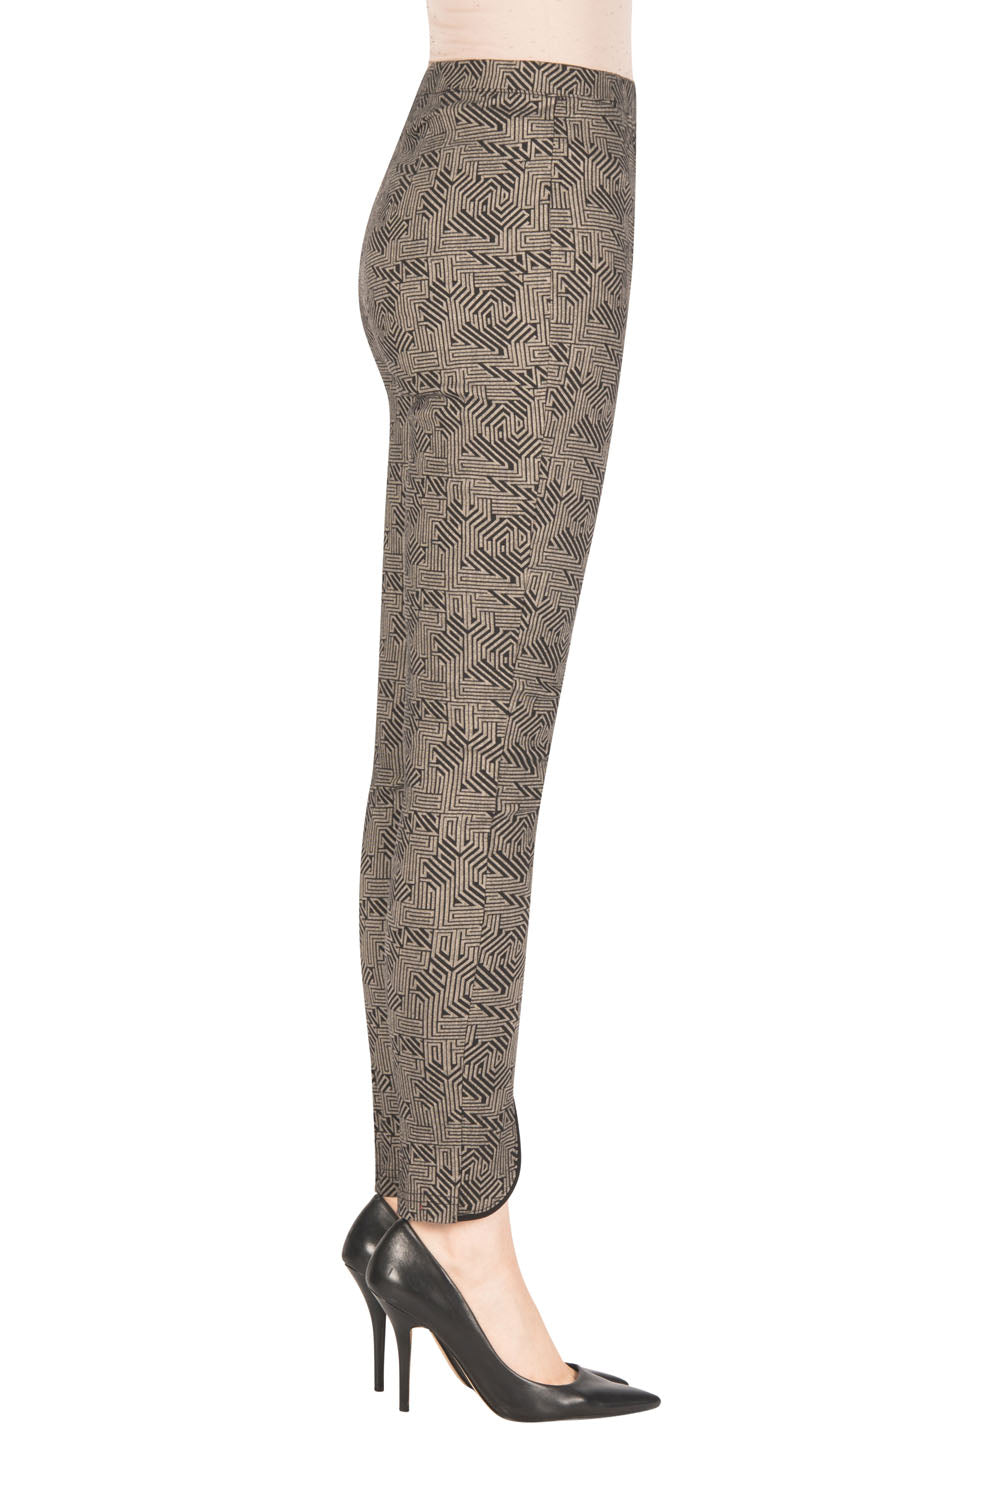 Joseph Ribkoff Black-Taupe Pant Style 183525